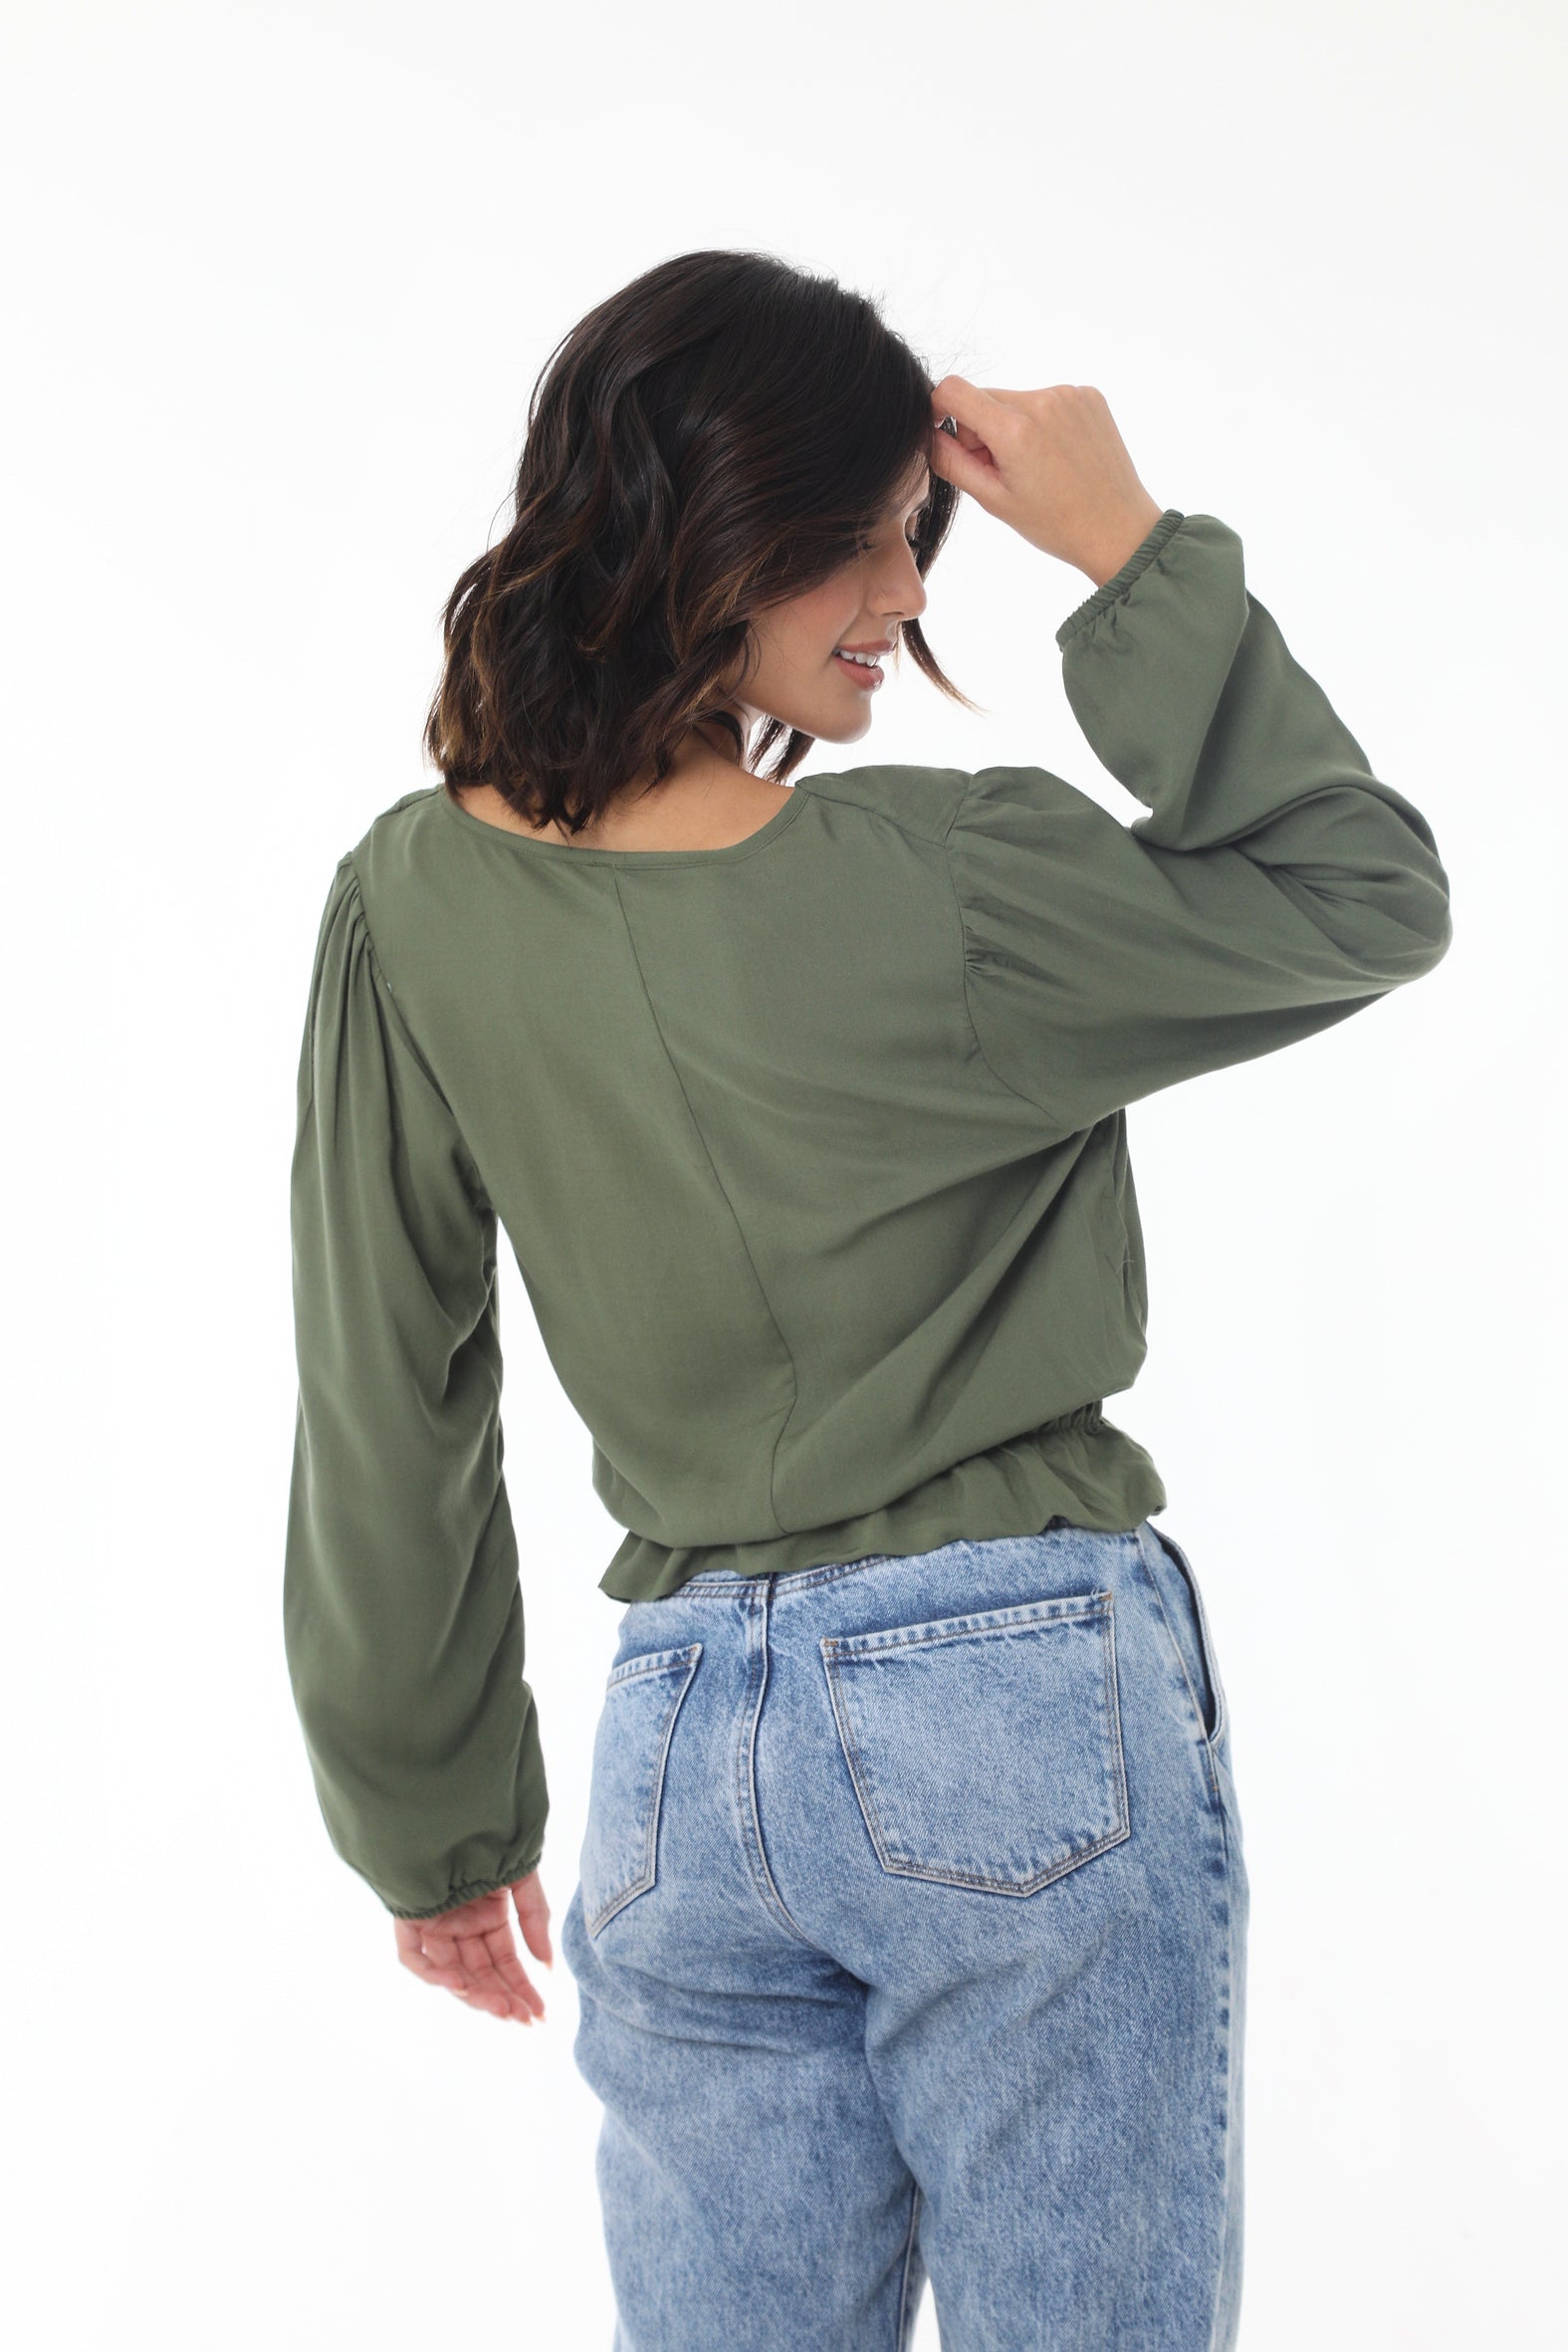 Blusa verde militar manga larga para mujer bombacha